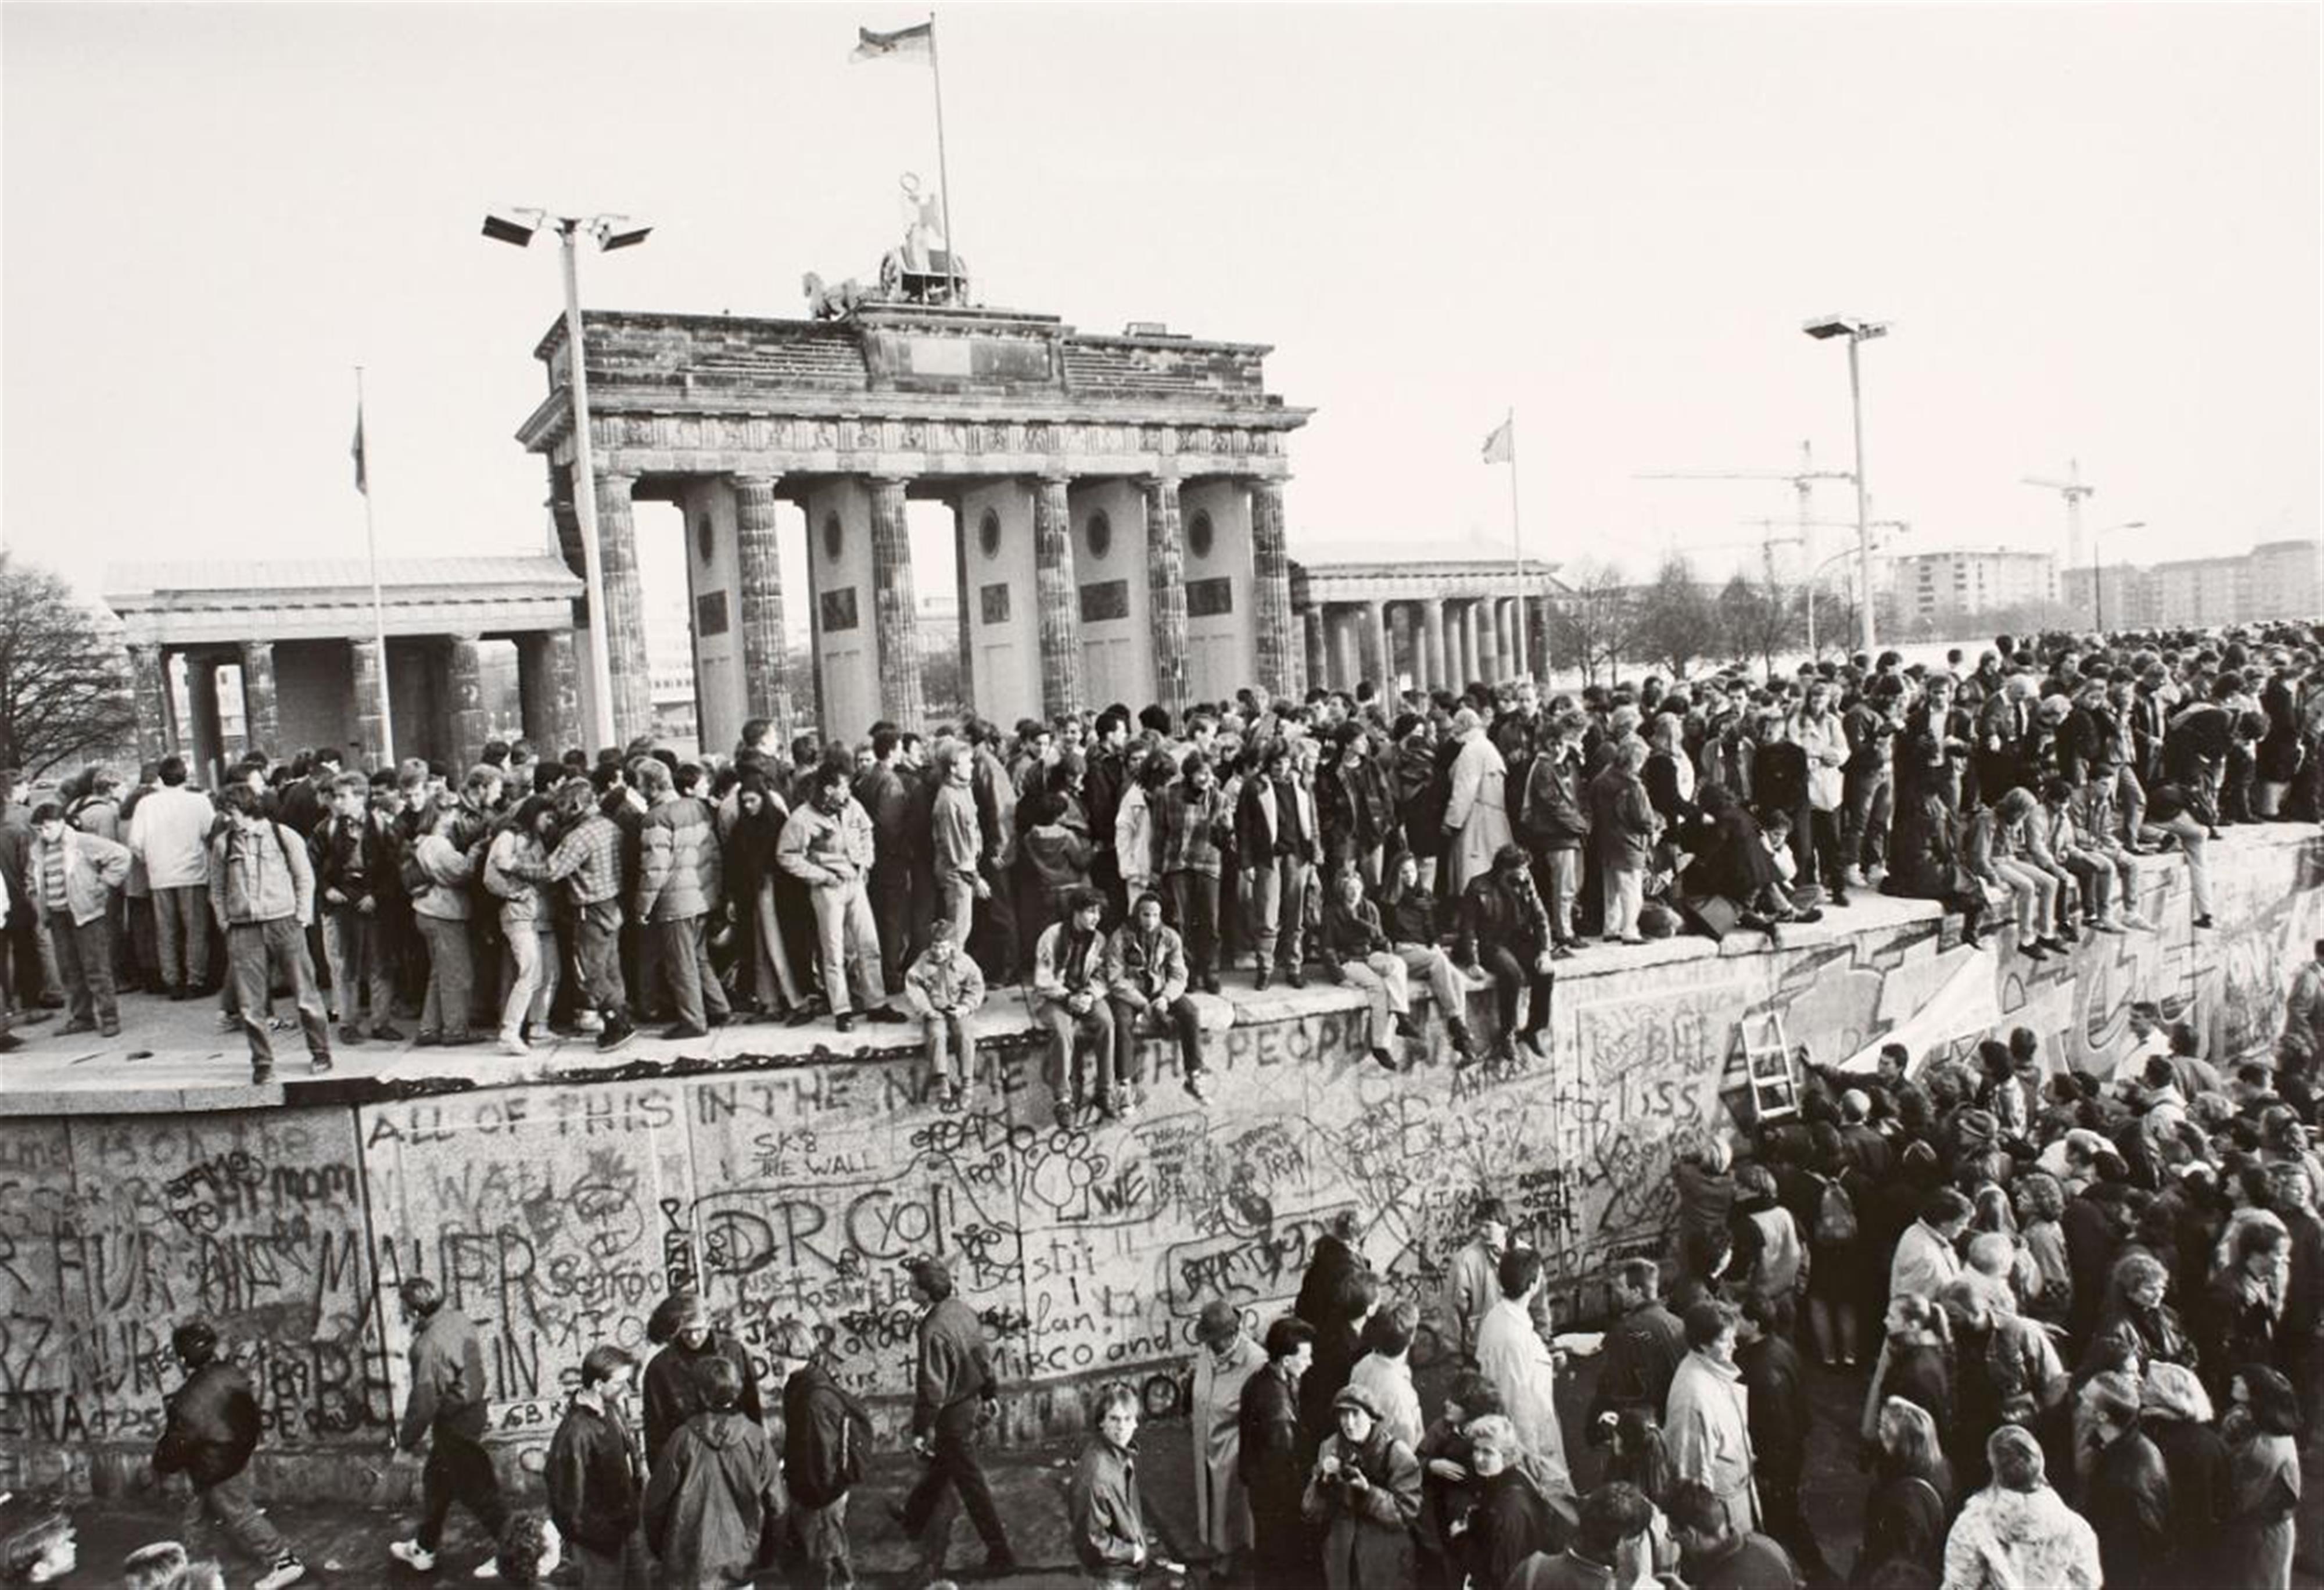 Barbara Klemm - Fall der Mauer, Berlin, 10. November 1989 (Fall of the Wall, Berlin, November 10, 1989) - image-1